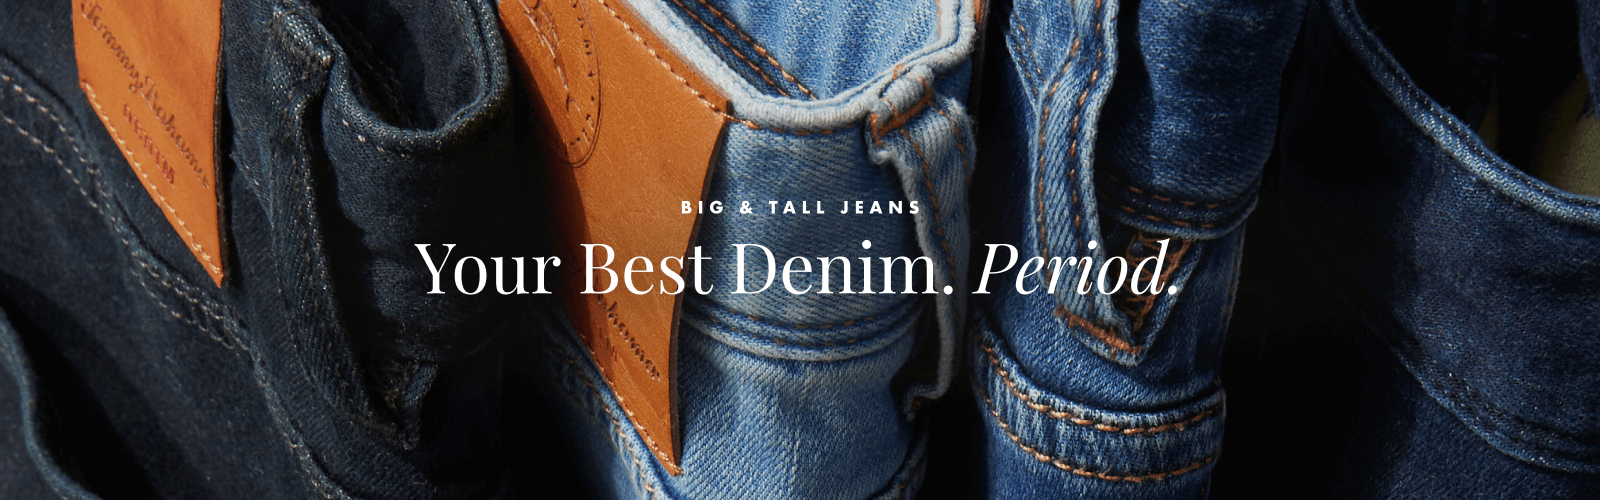 Big & Tall Jeans: Your Best Denim. Period.